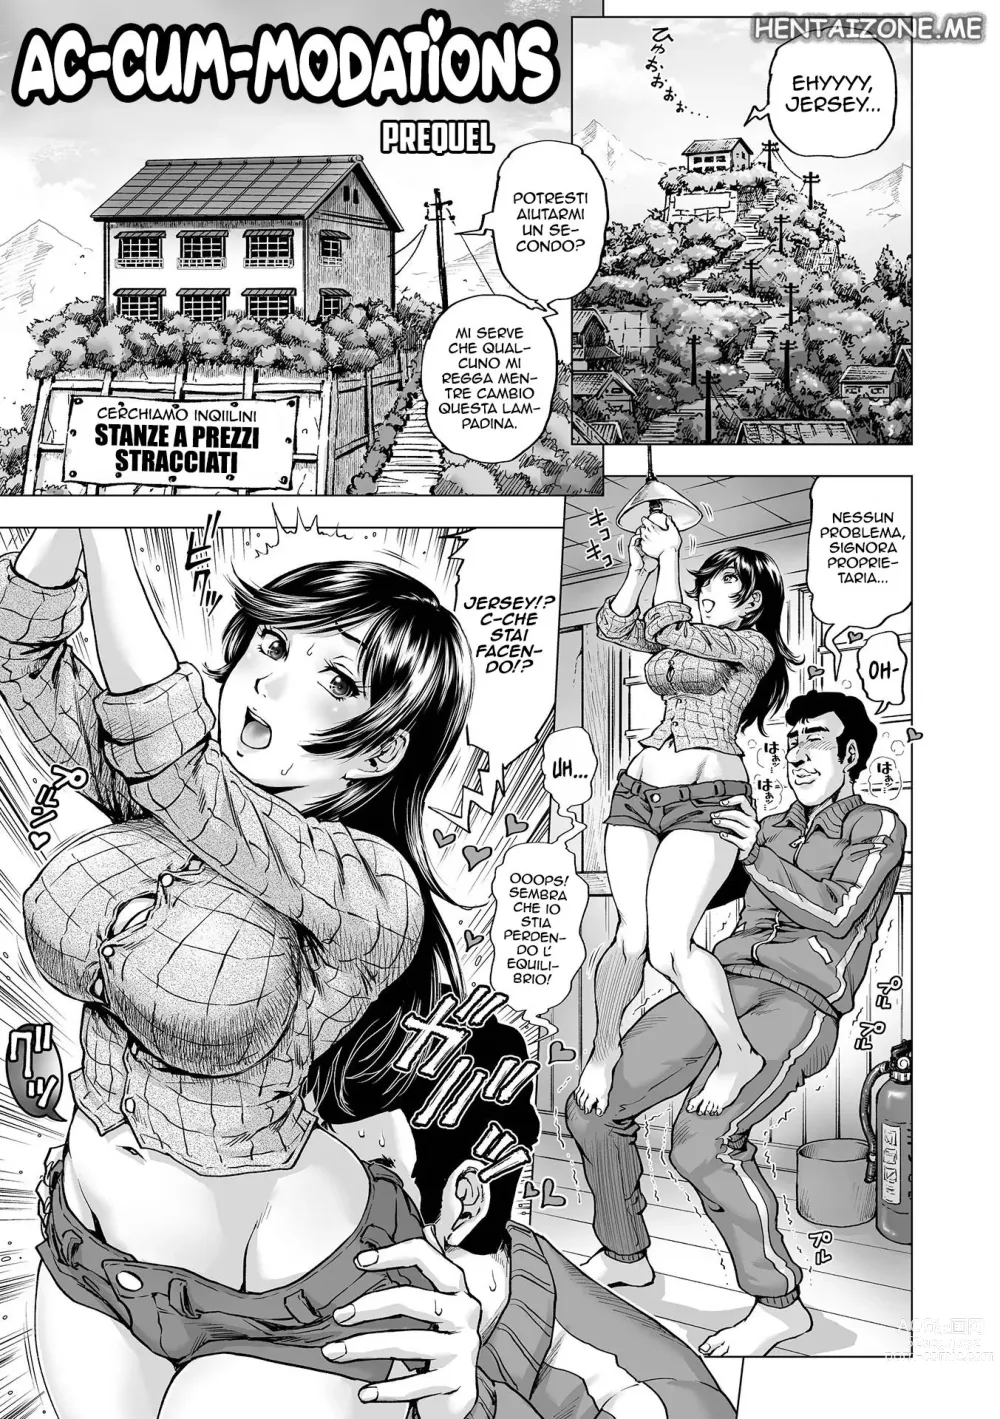 Page 1 of manga Ac-cum-modations - Prequel